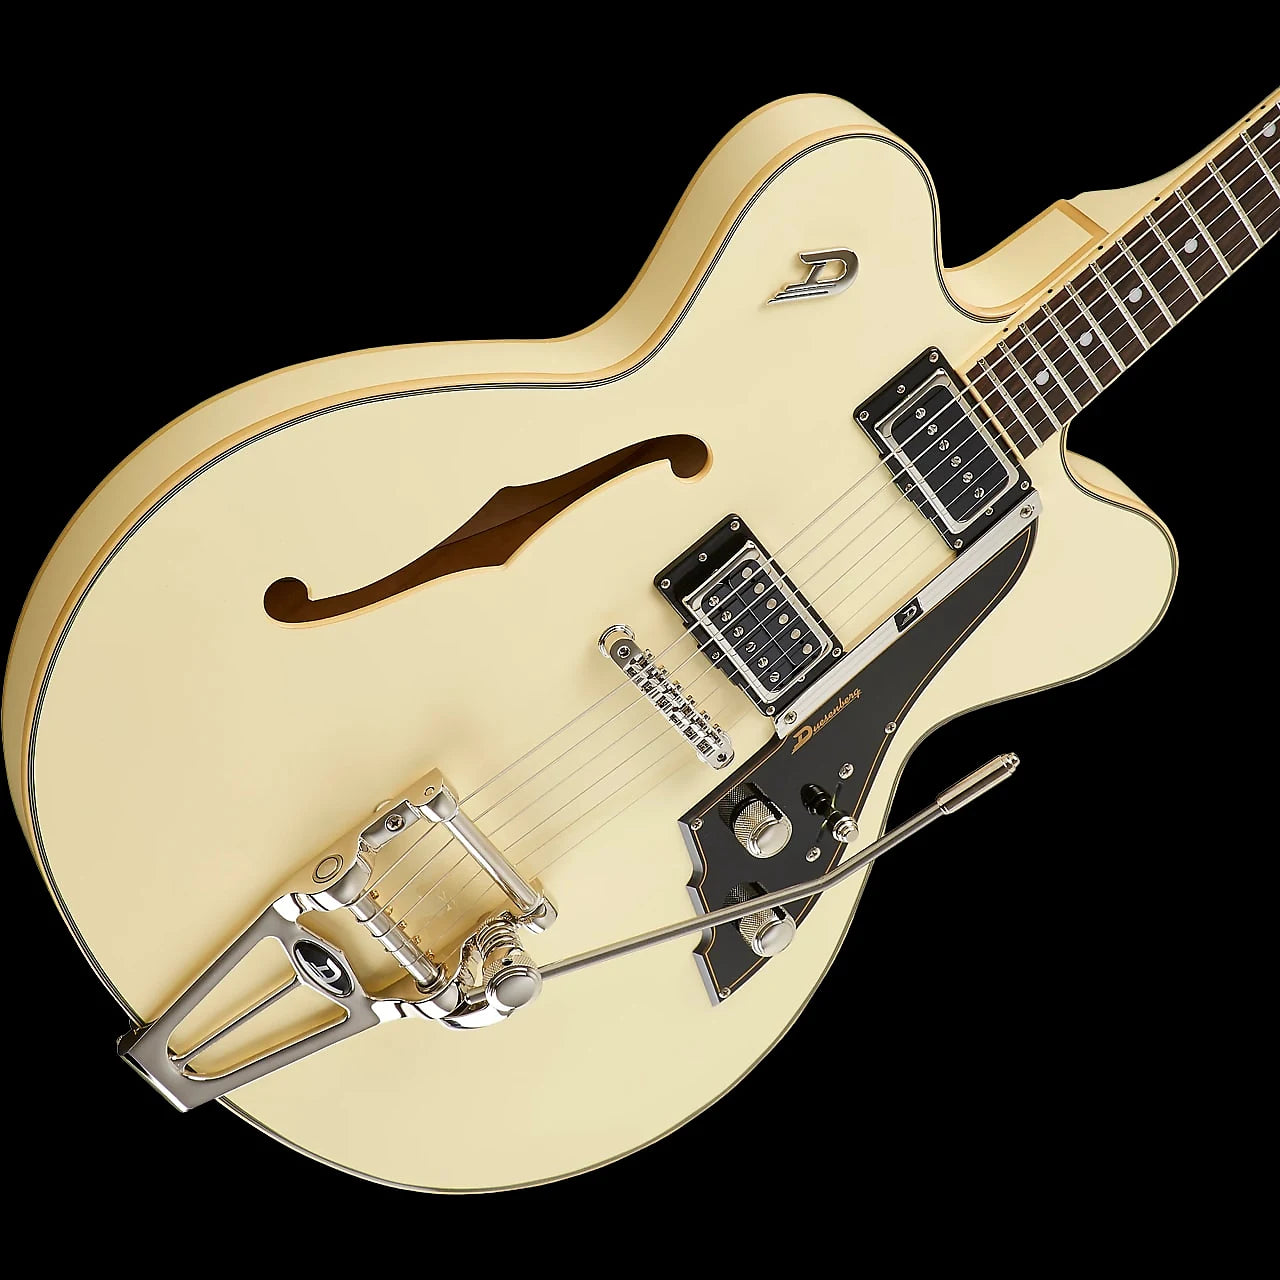 Duesenberg Fullerton CC Vintage White Electric Guitar